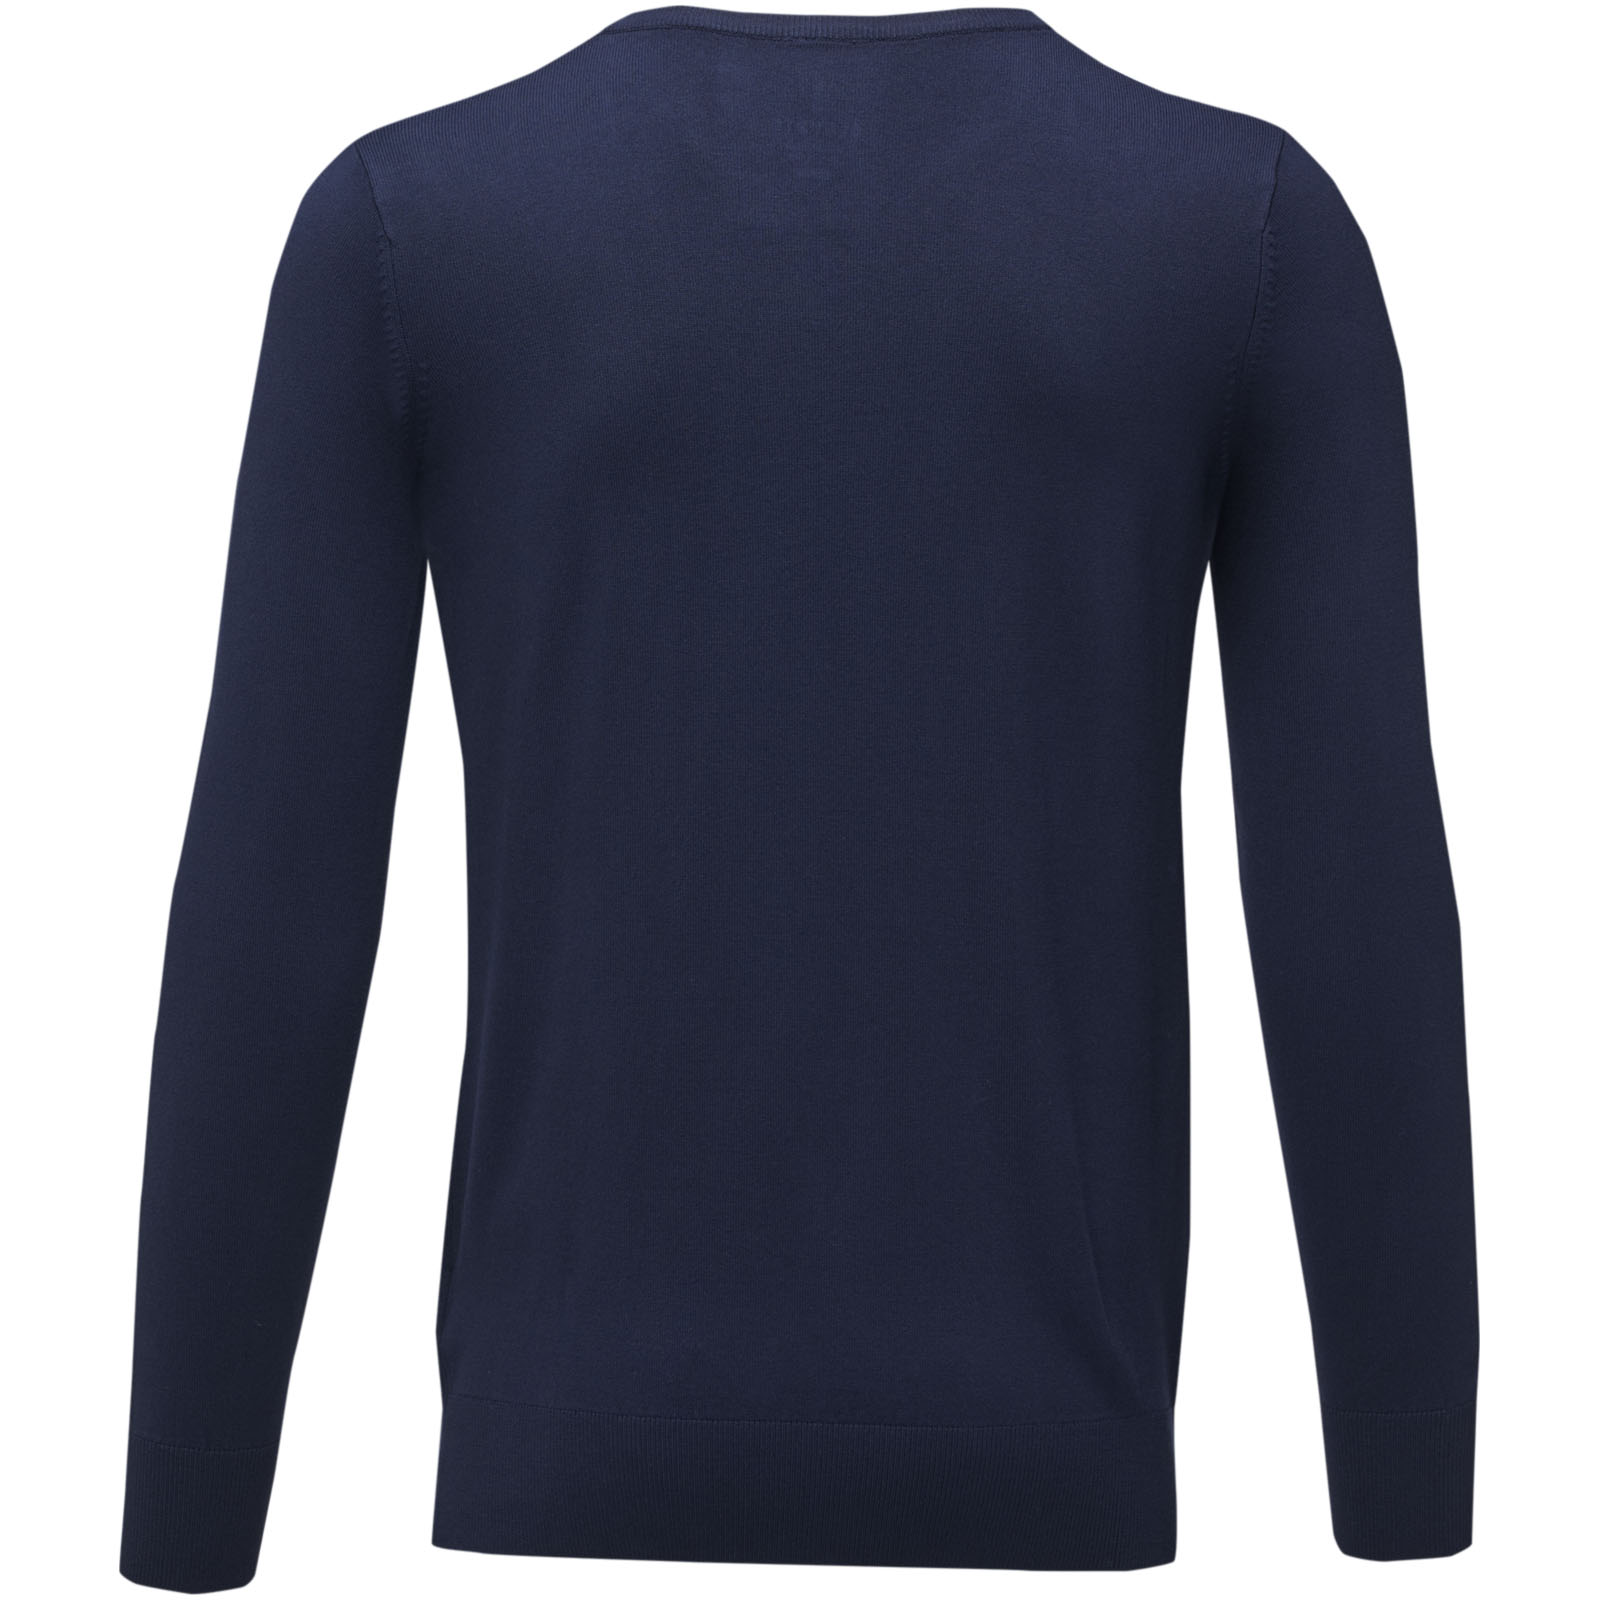 Advertising Pullovers - Stanton men's v-neck pullover - 2